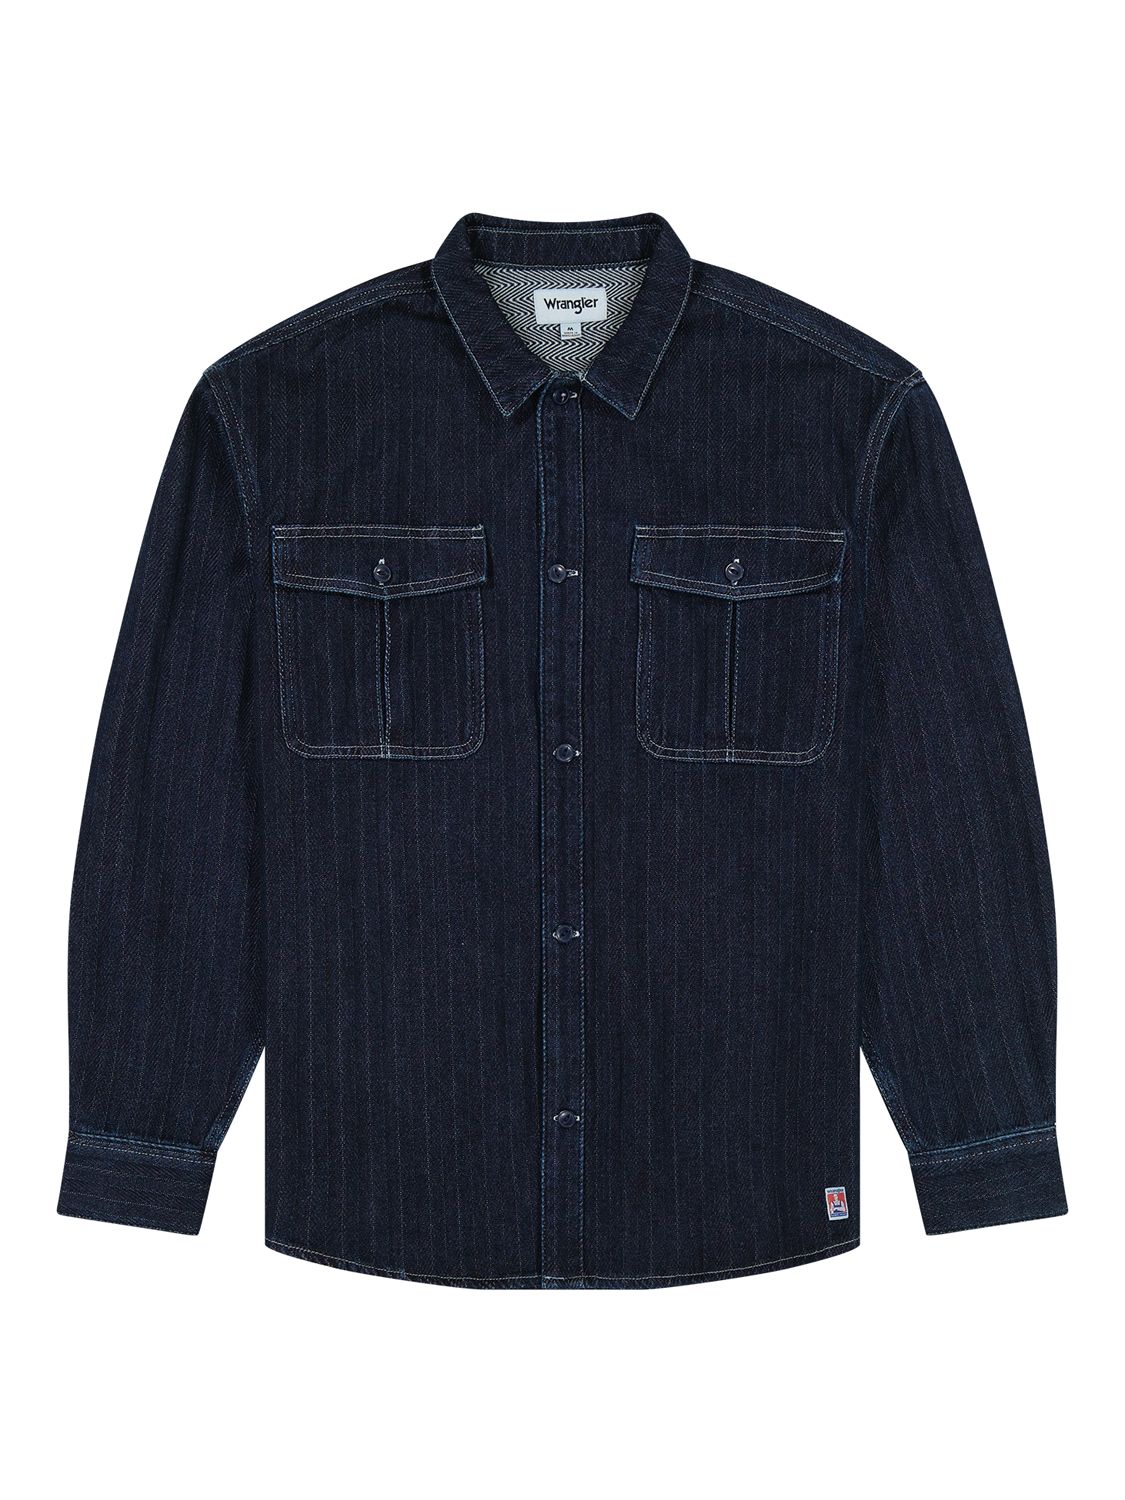 Buy Wrangler Casey Jones Utilty Shirt, Medium Indigo Online at johnlewis.com